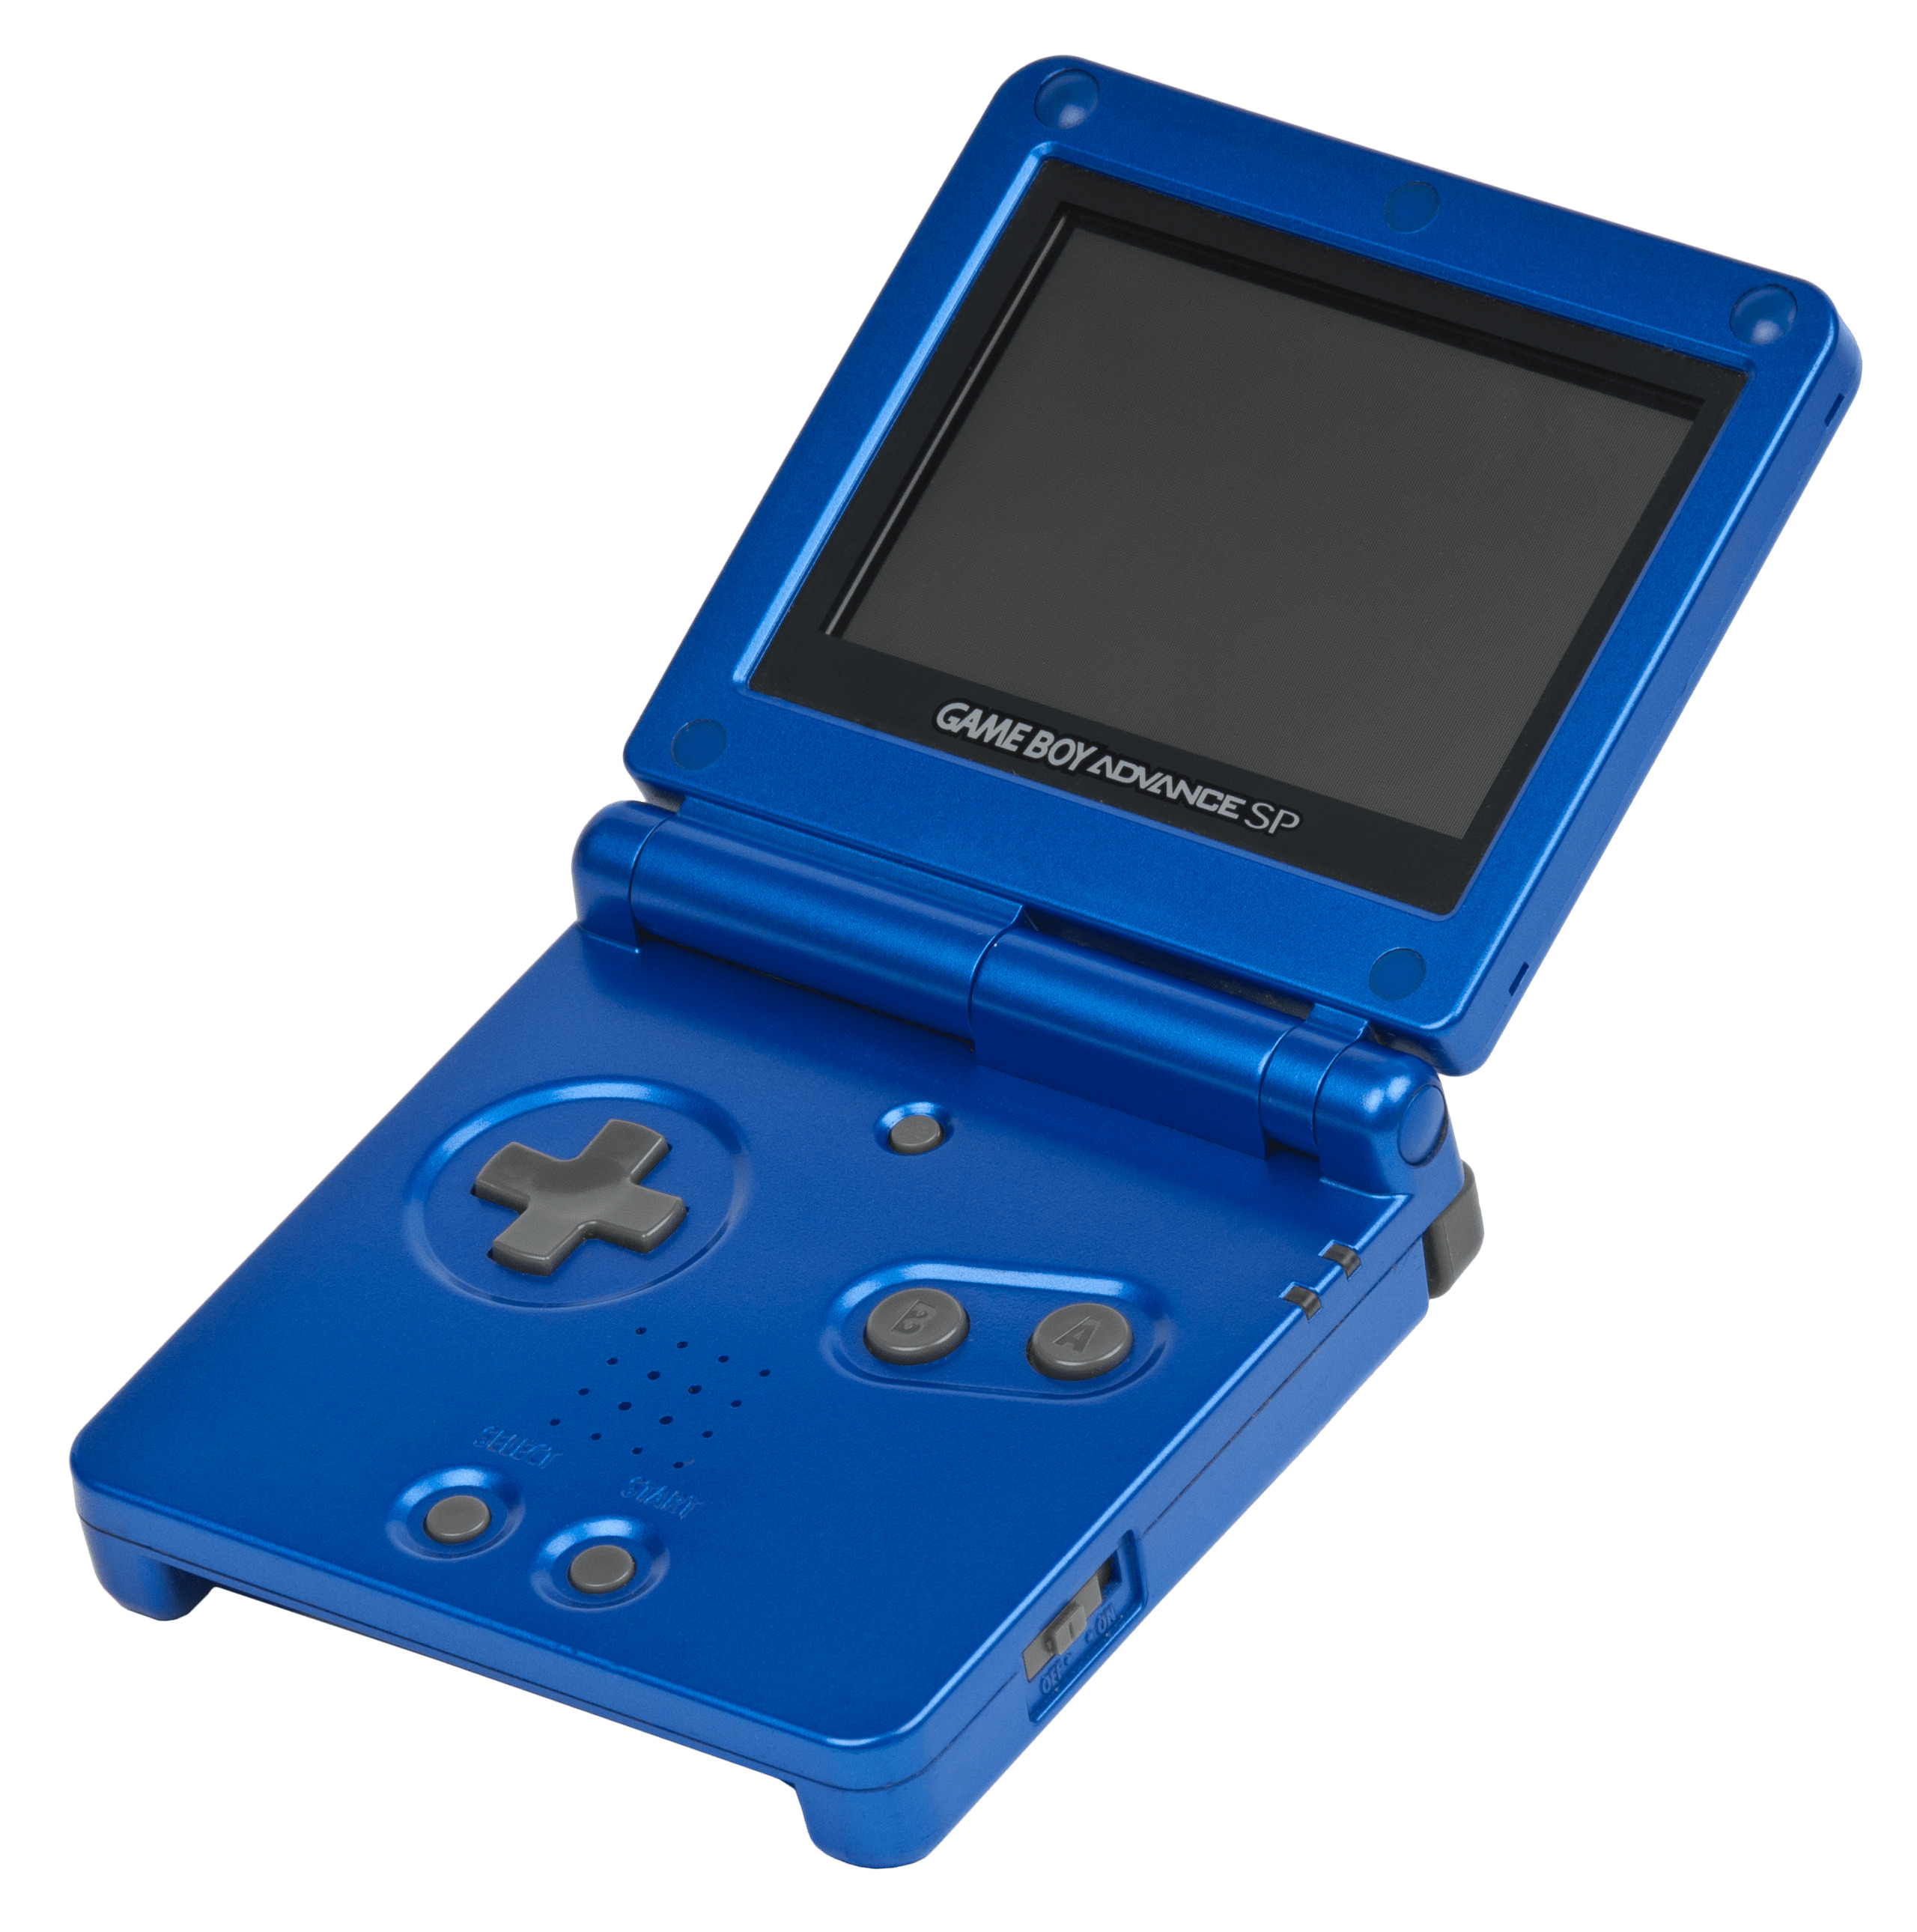 Nintendo Game Boy Advance SP icons